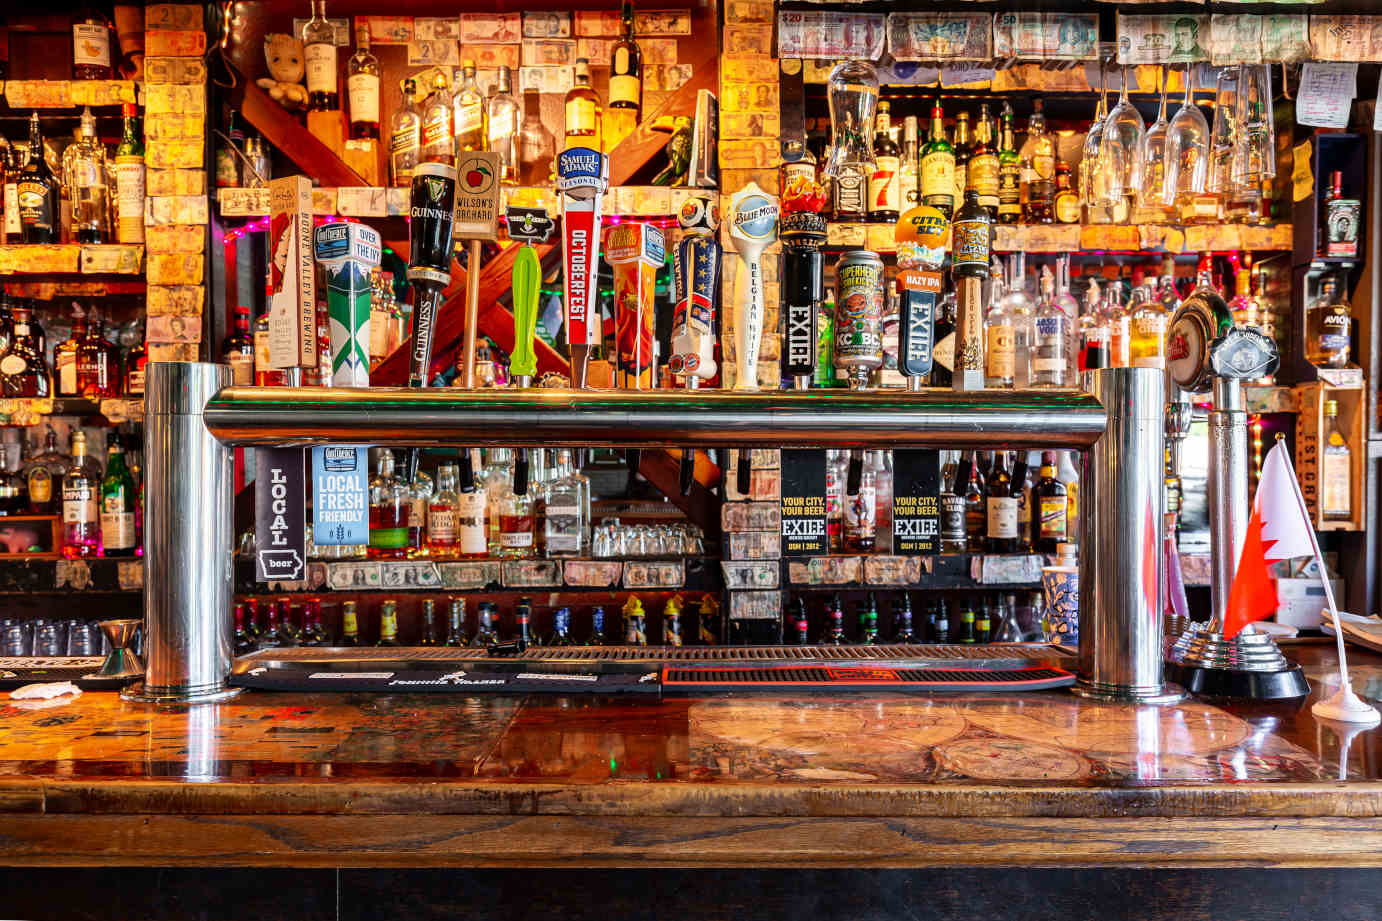 Interior, beer taps in bar area